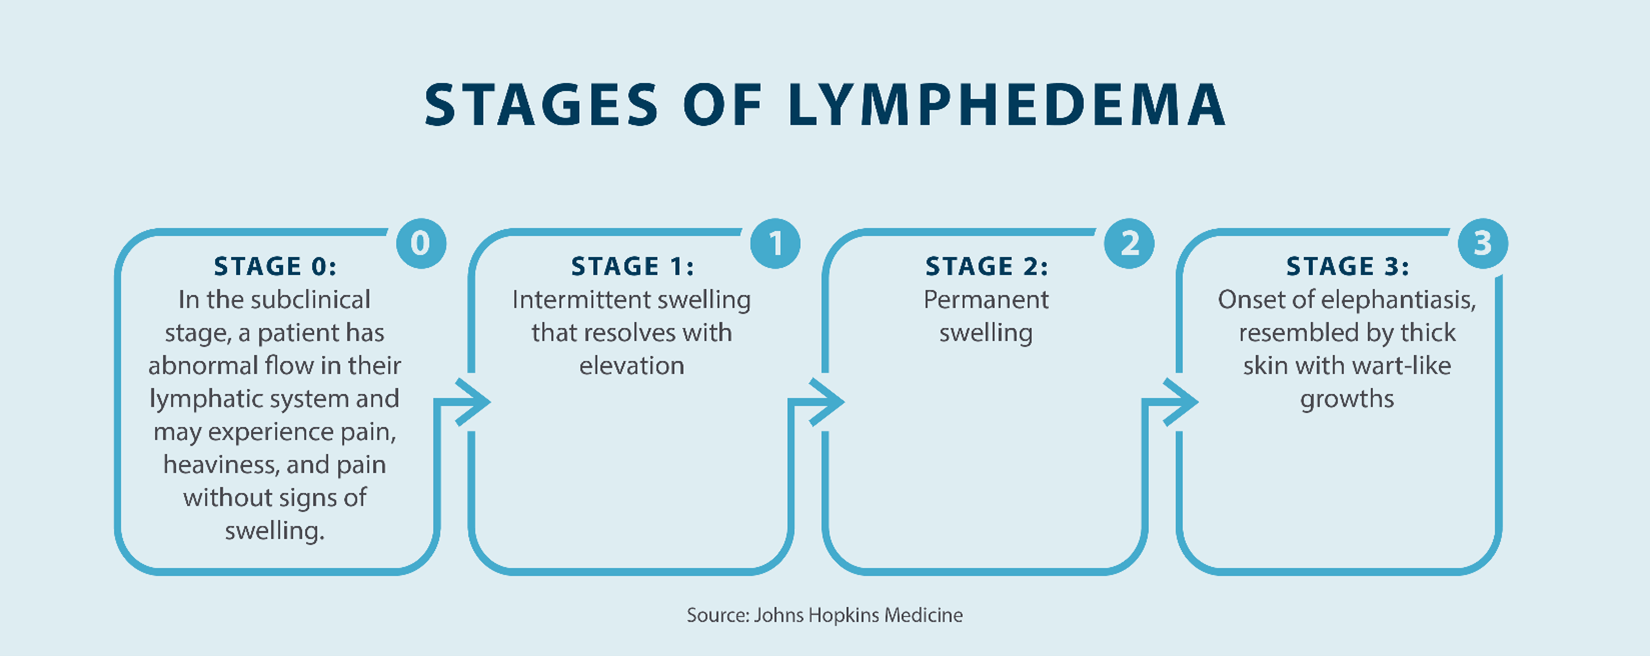 stages of lymphedema; stage 0, stage 1, stage 2, stage 3 Source John Hopkins Medicine